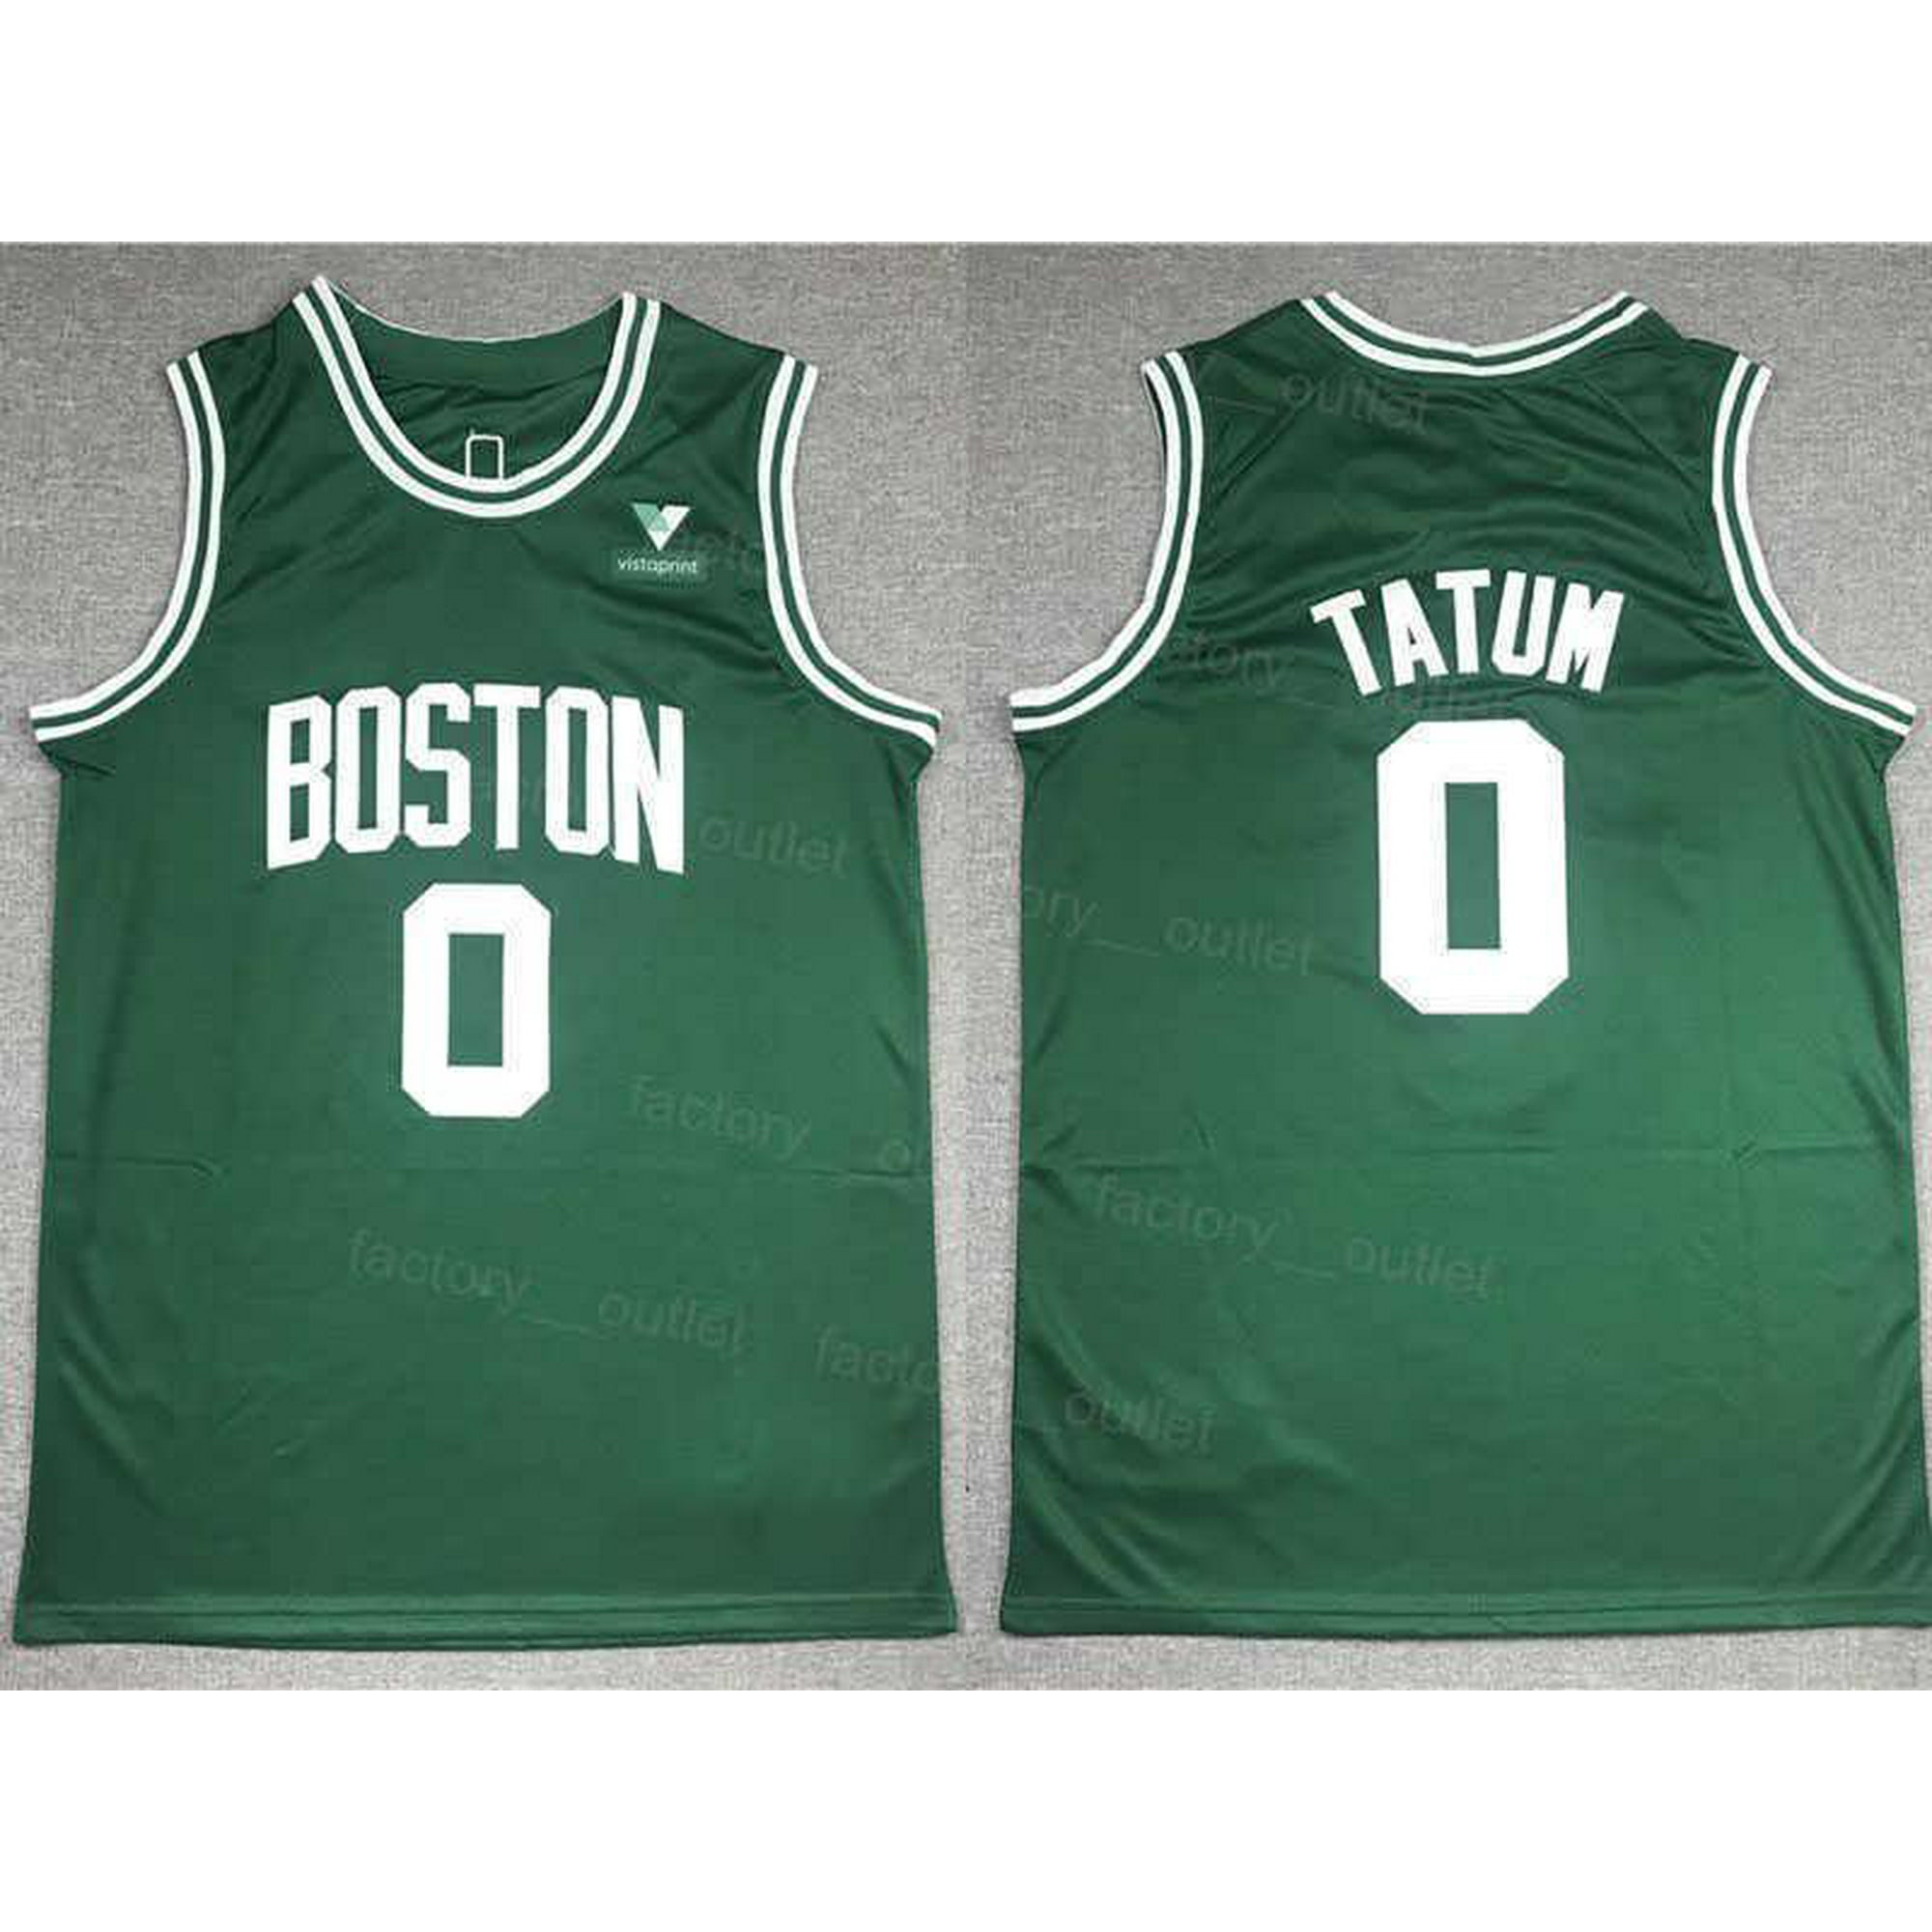 Buy Tatum Celtics White/Green Basketball Jersey